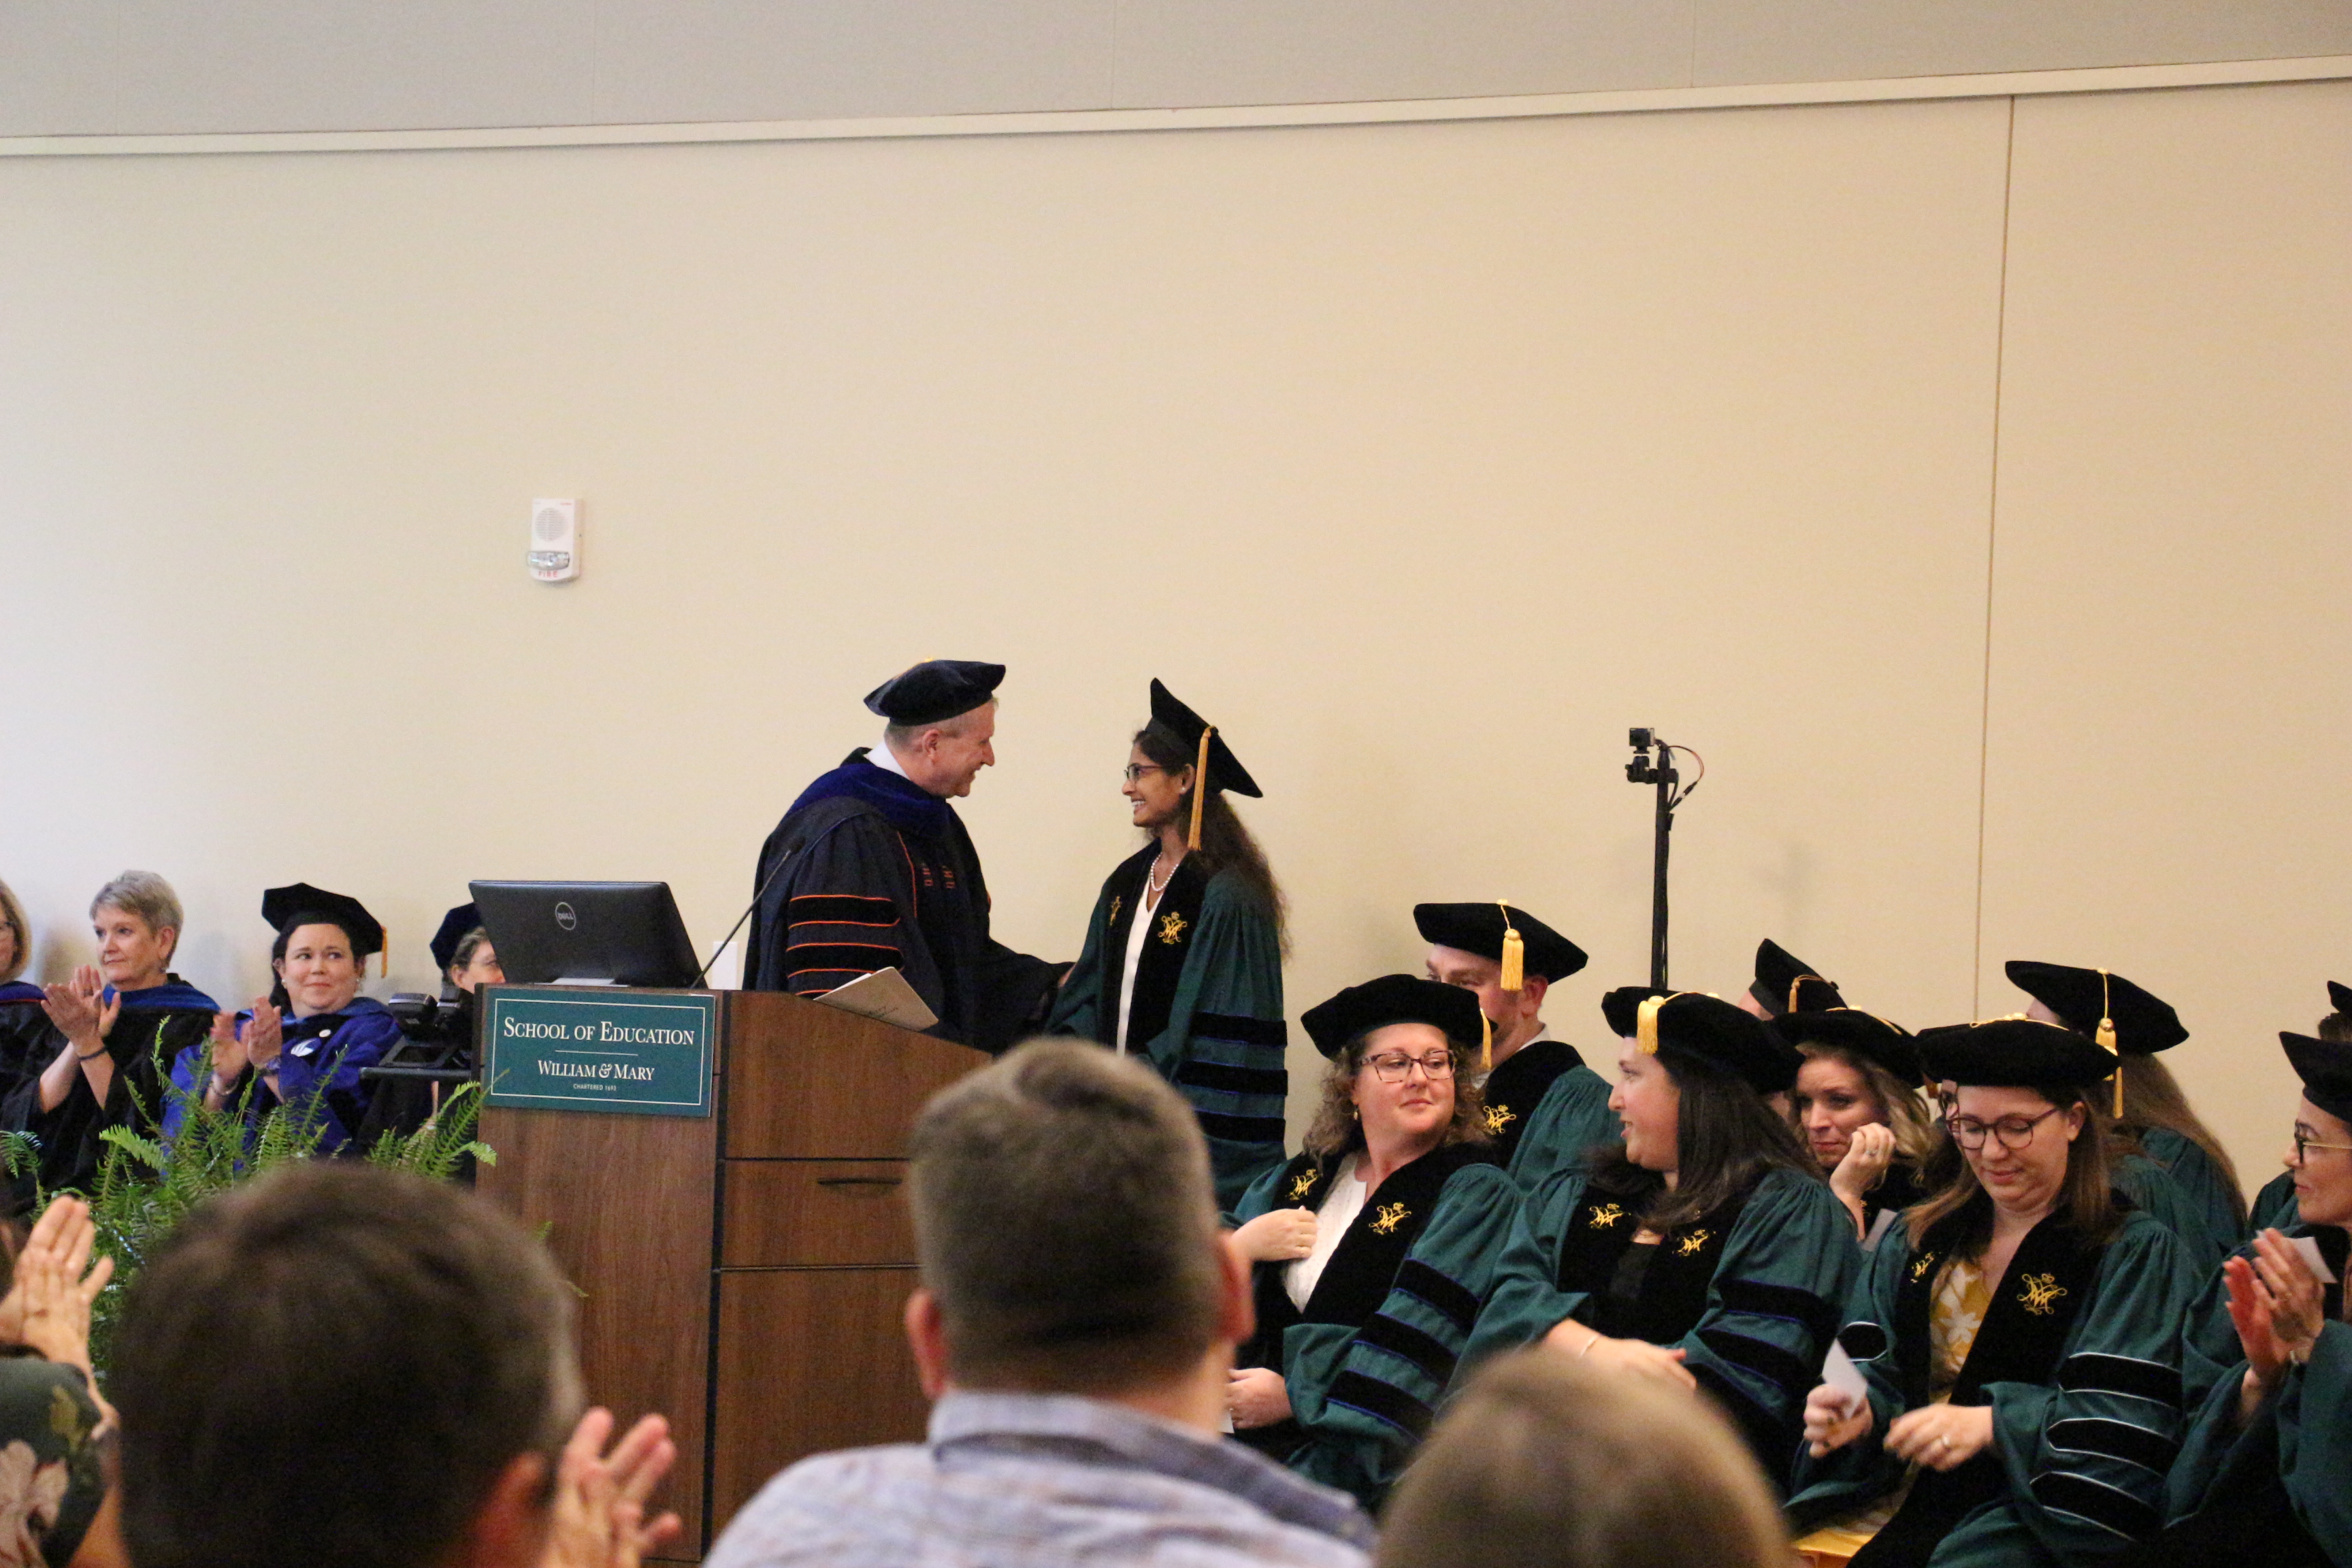 Dean Knoeppel Addresses Graduate